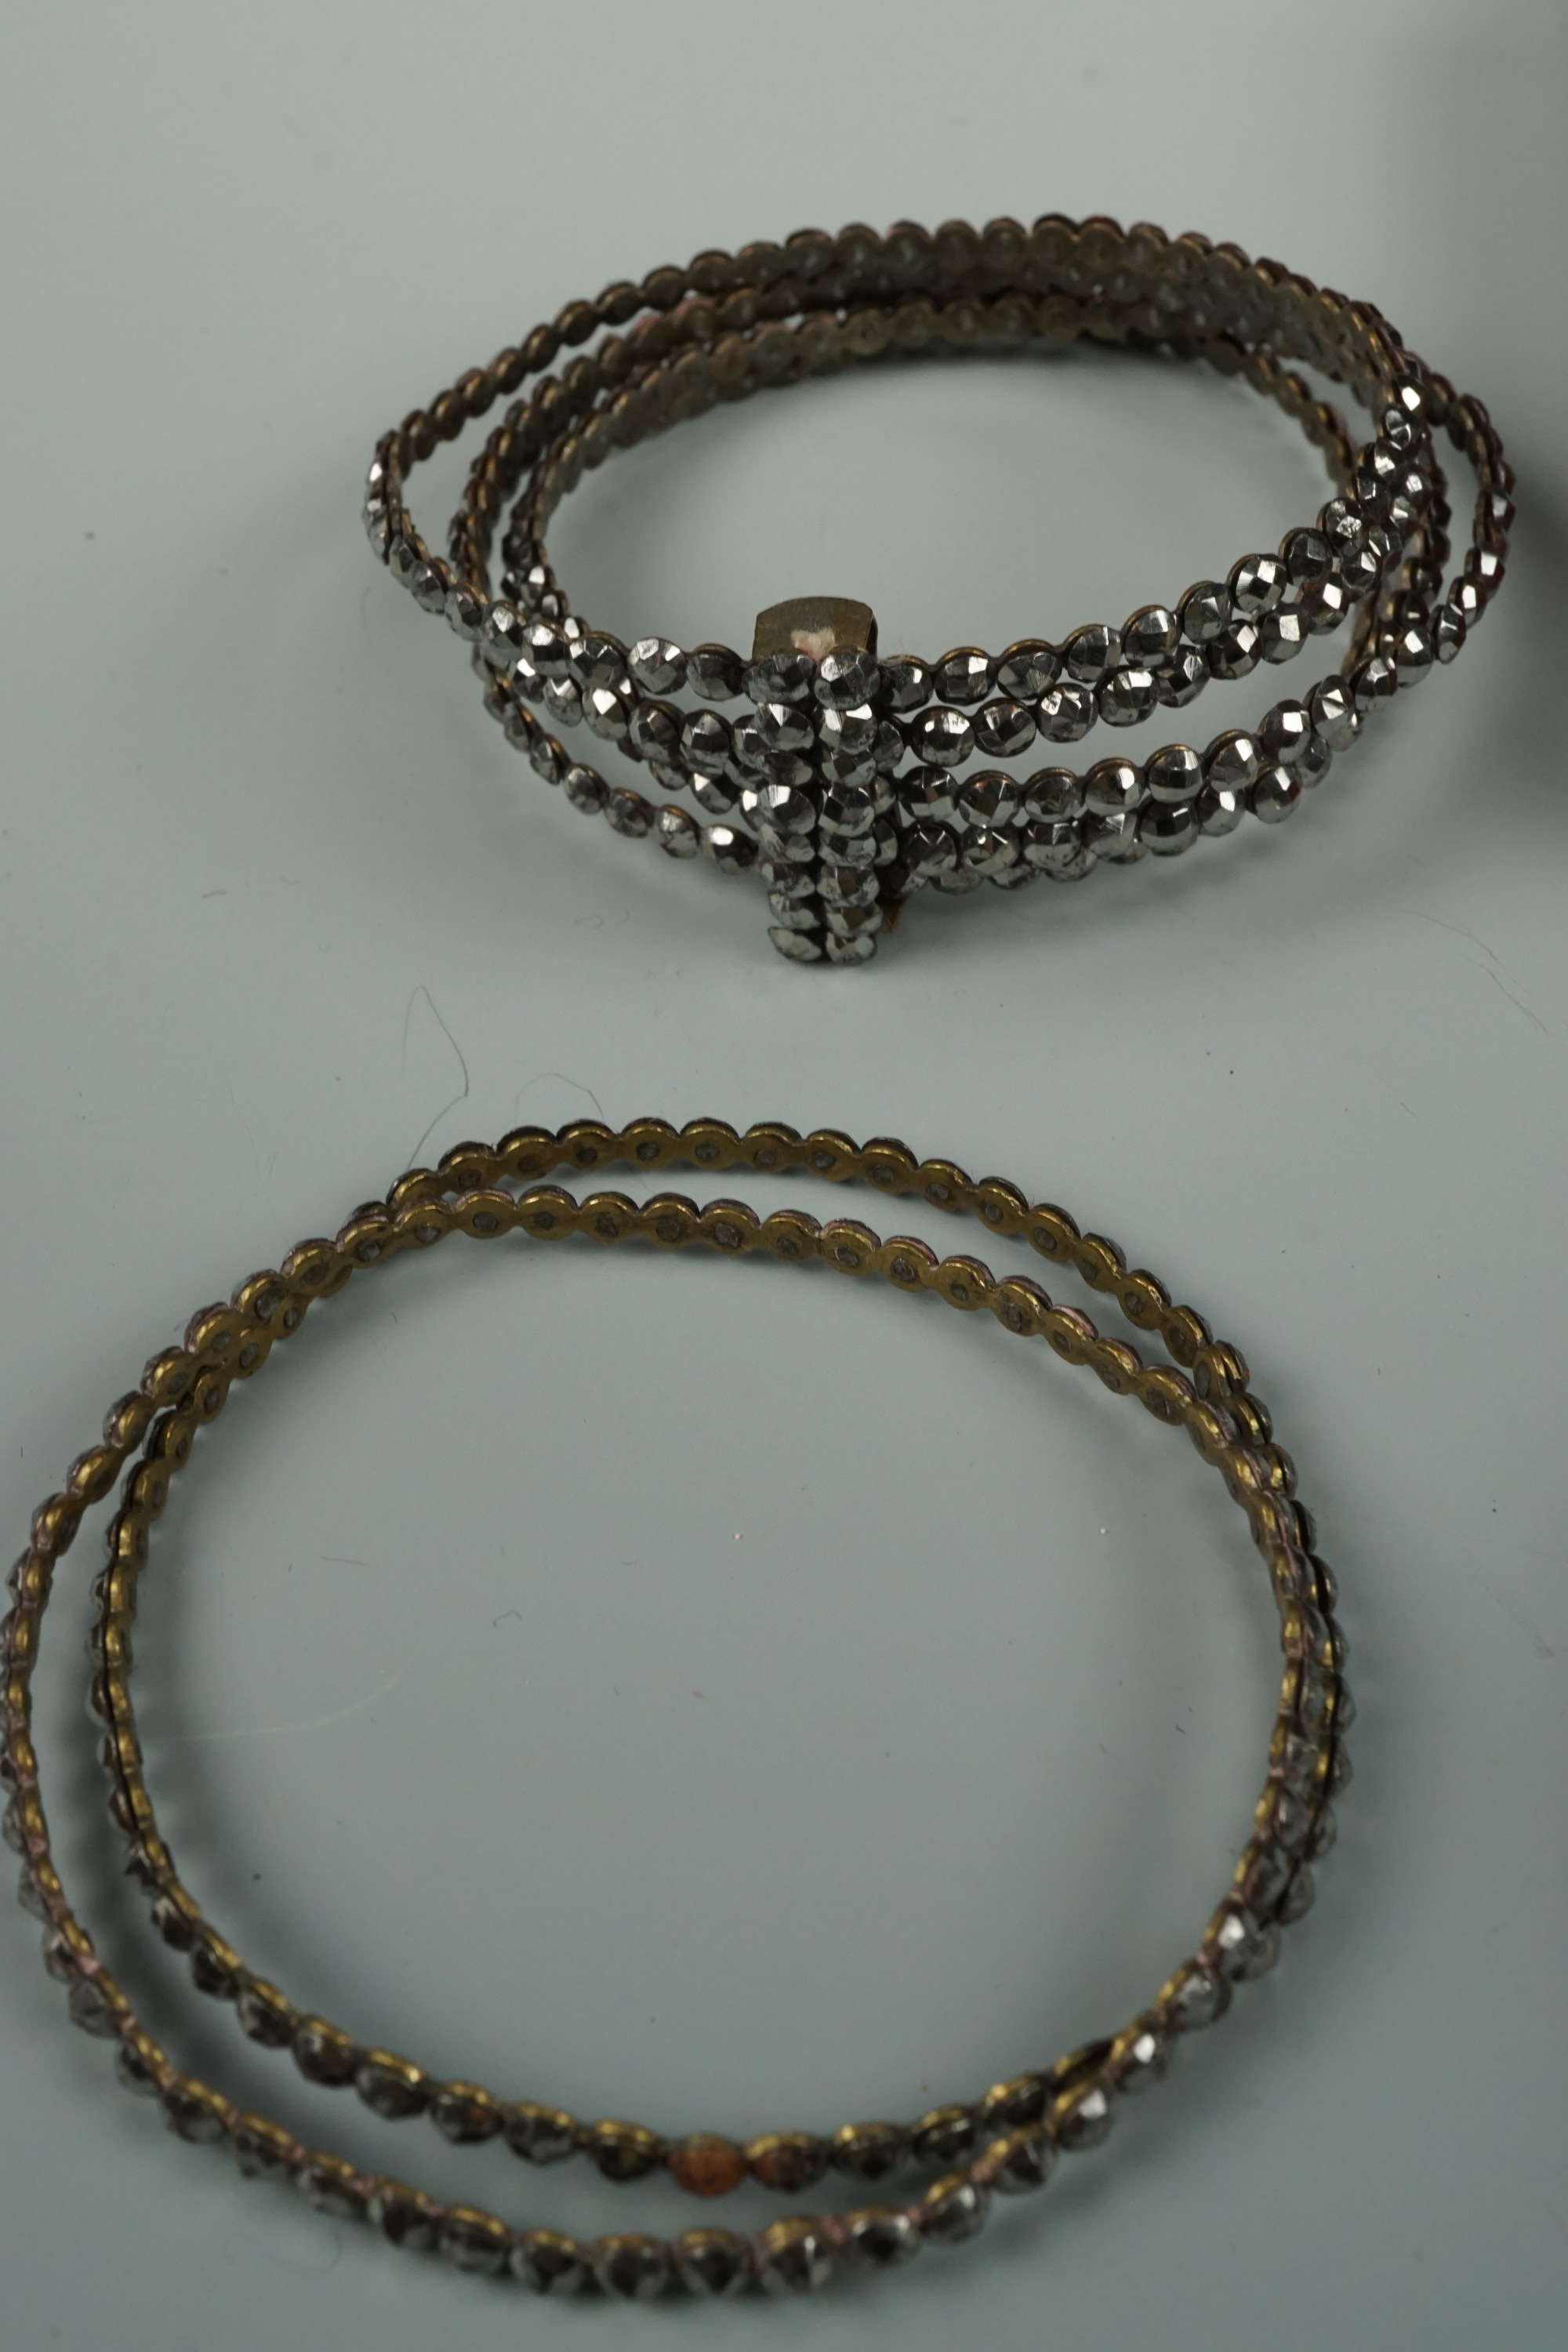 Antique cut steel jewellery parure, comprising pendant necklace, choker, bracelet, bangles, - Image 5 of 5